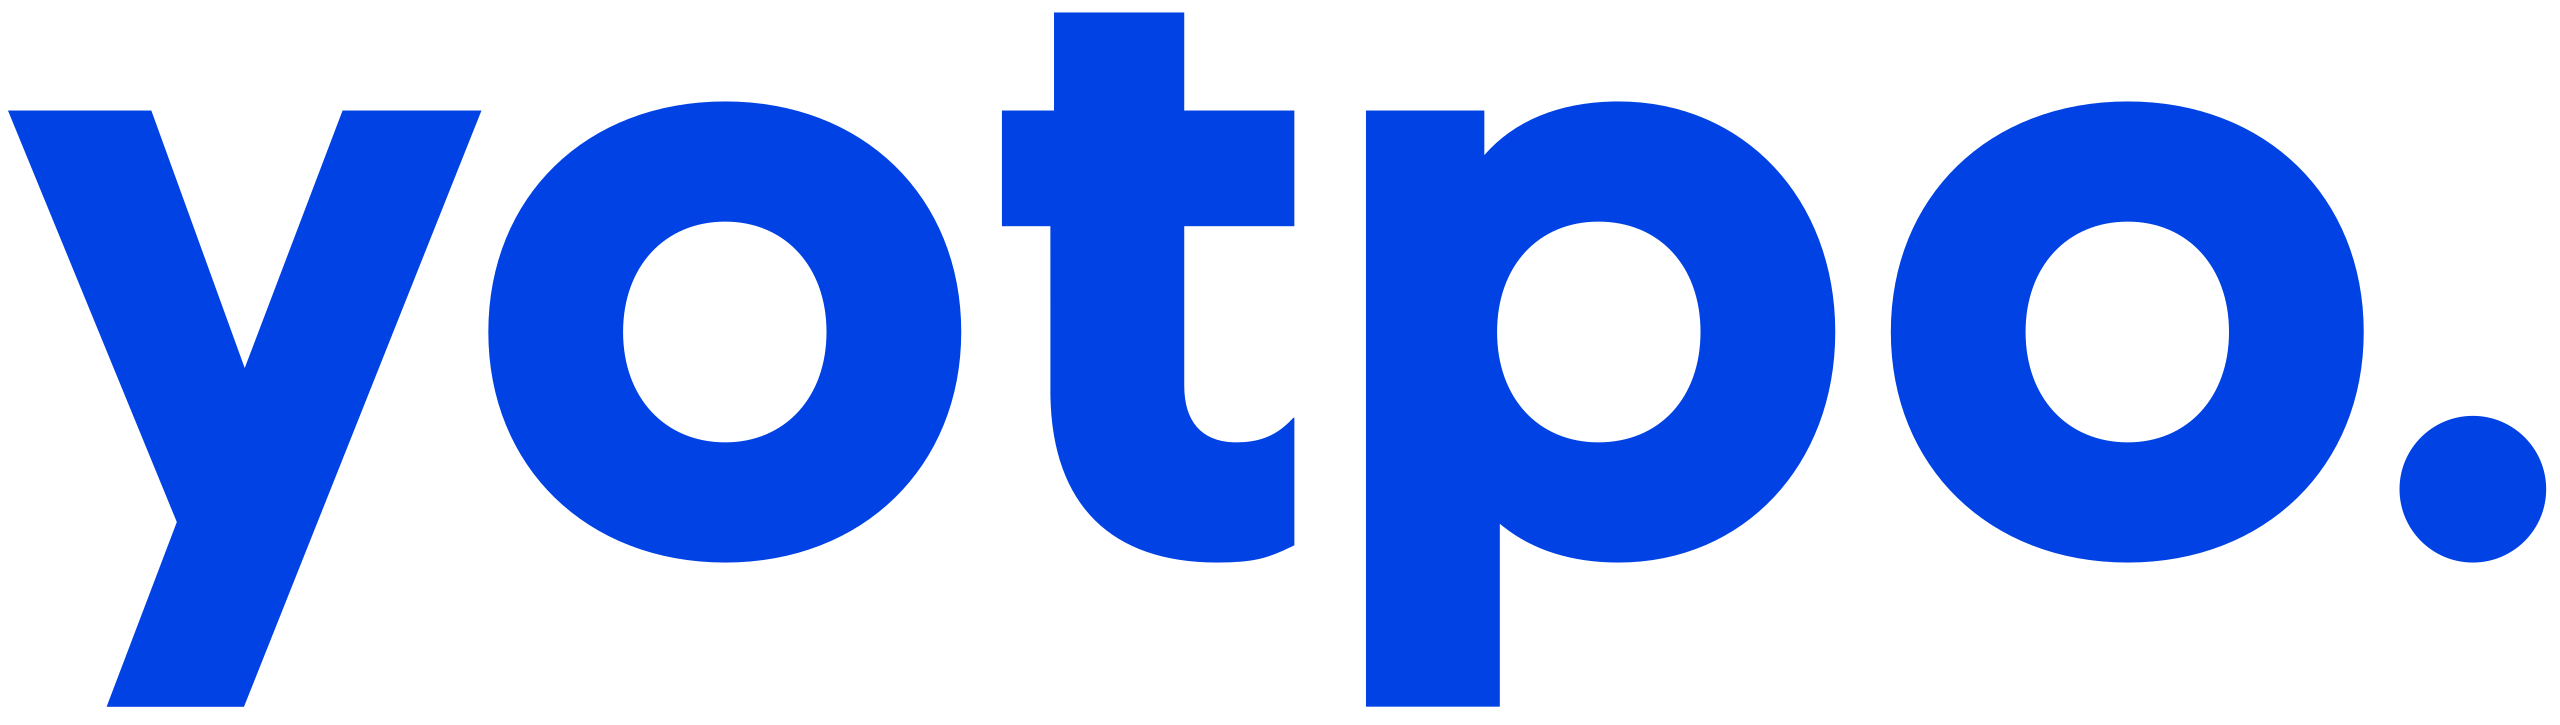 Yotpo_logo